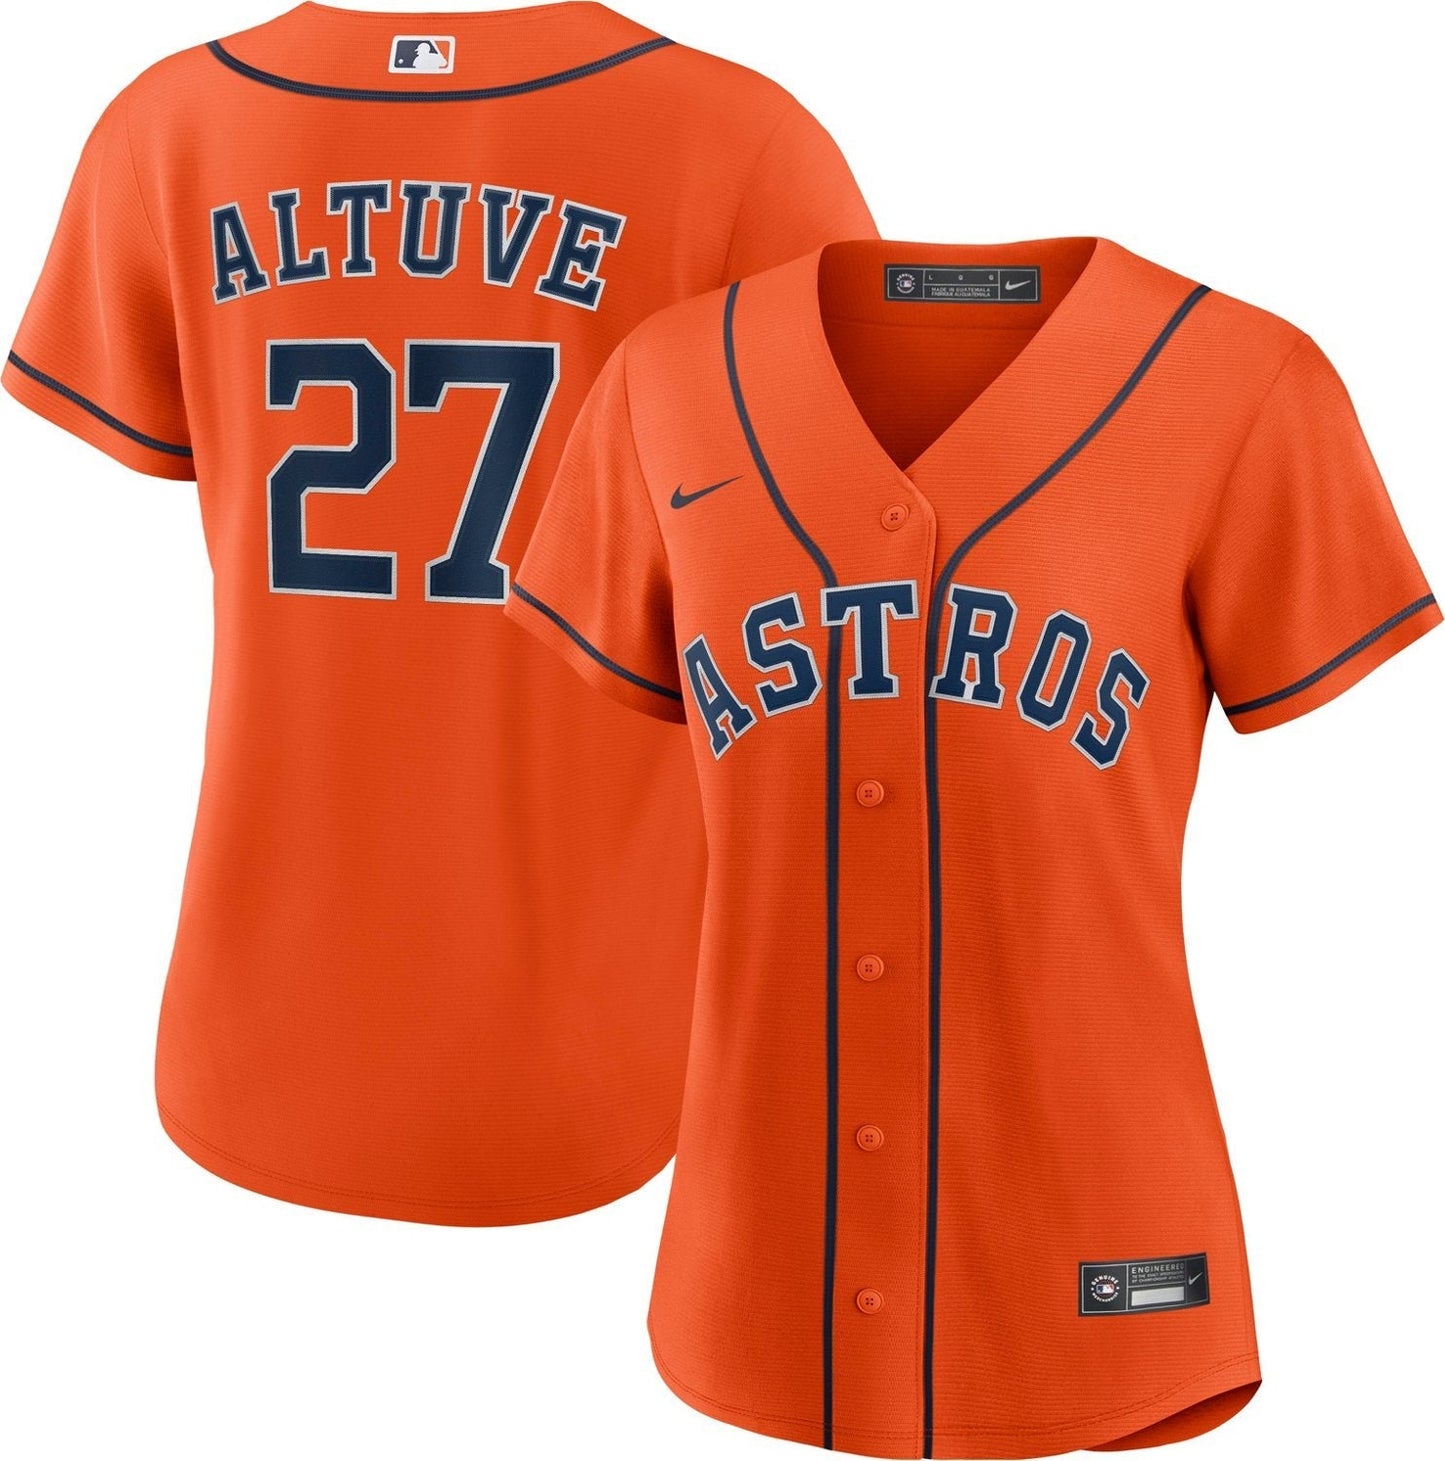 Nike Women's Houston Astros José Altuve #27 Official Replica Jersey